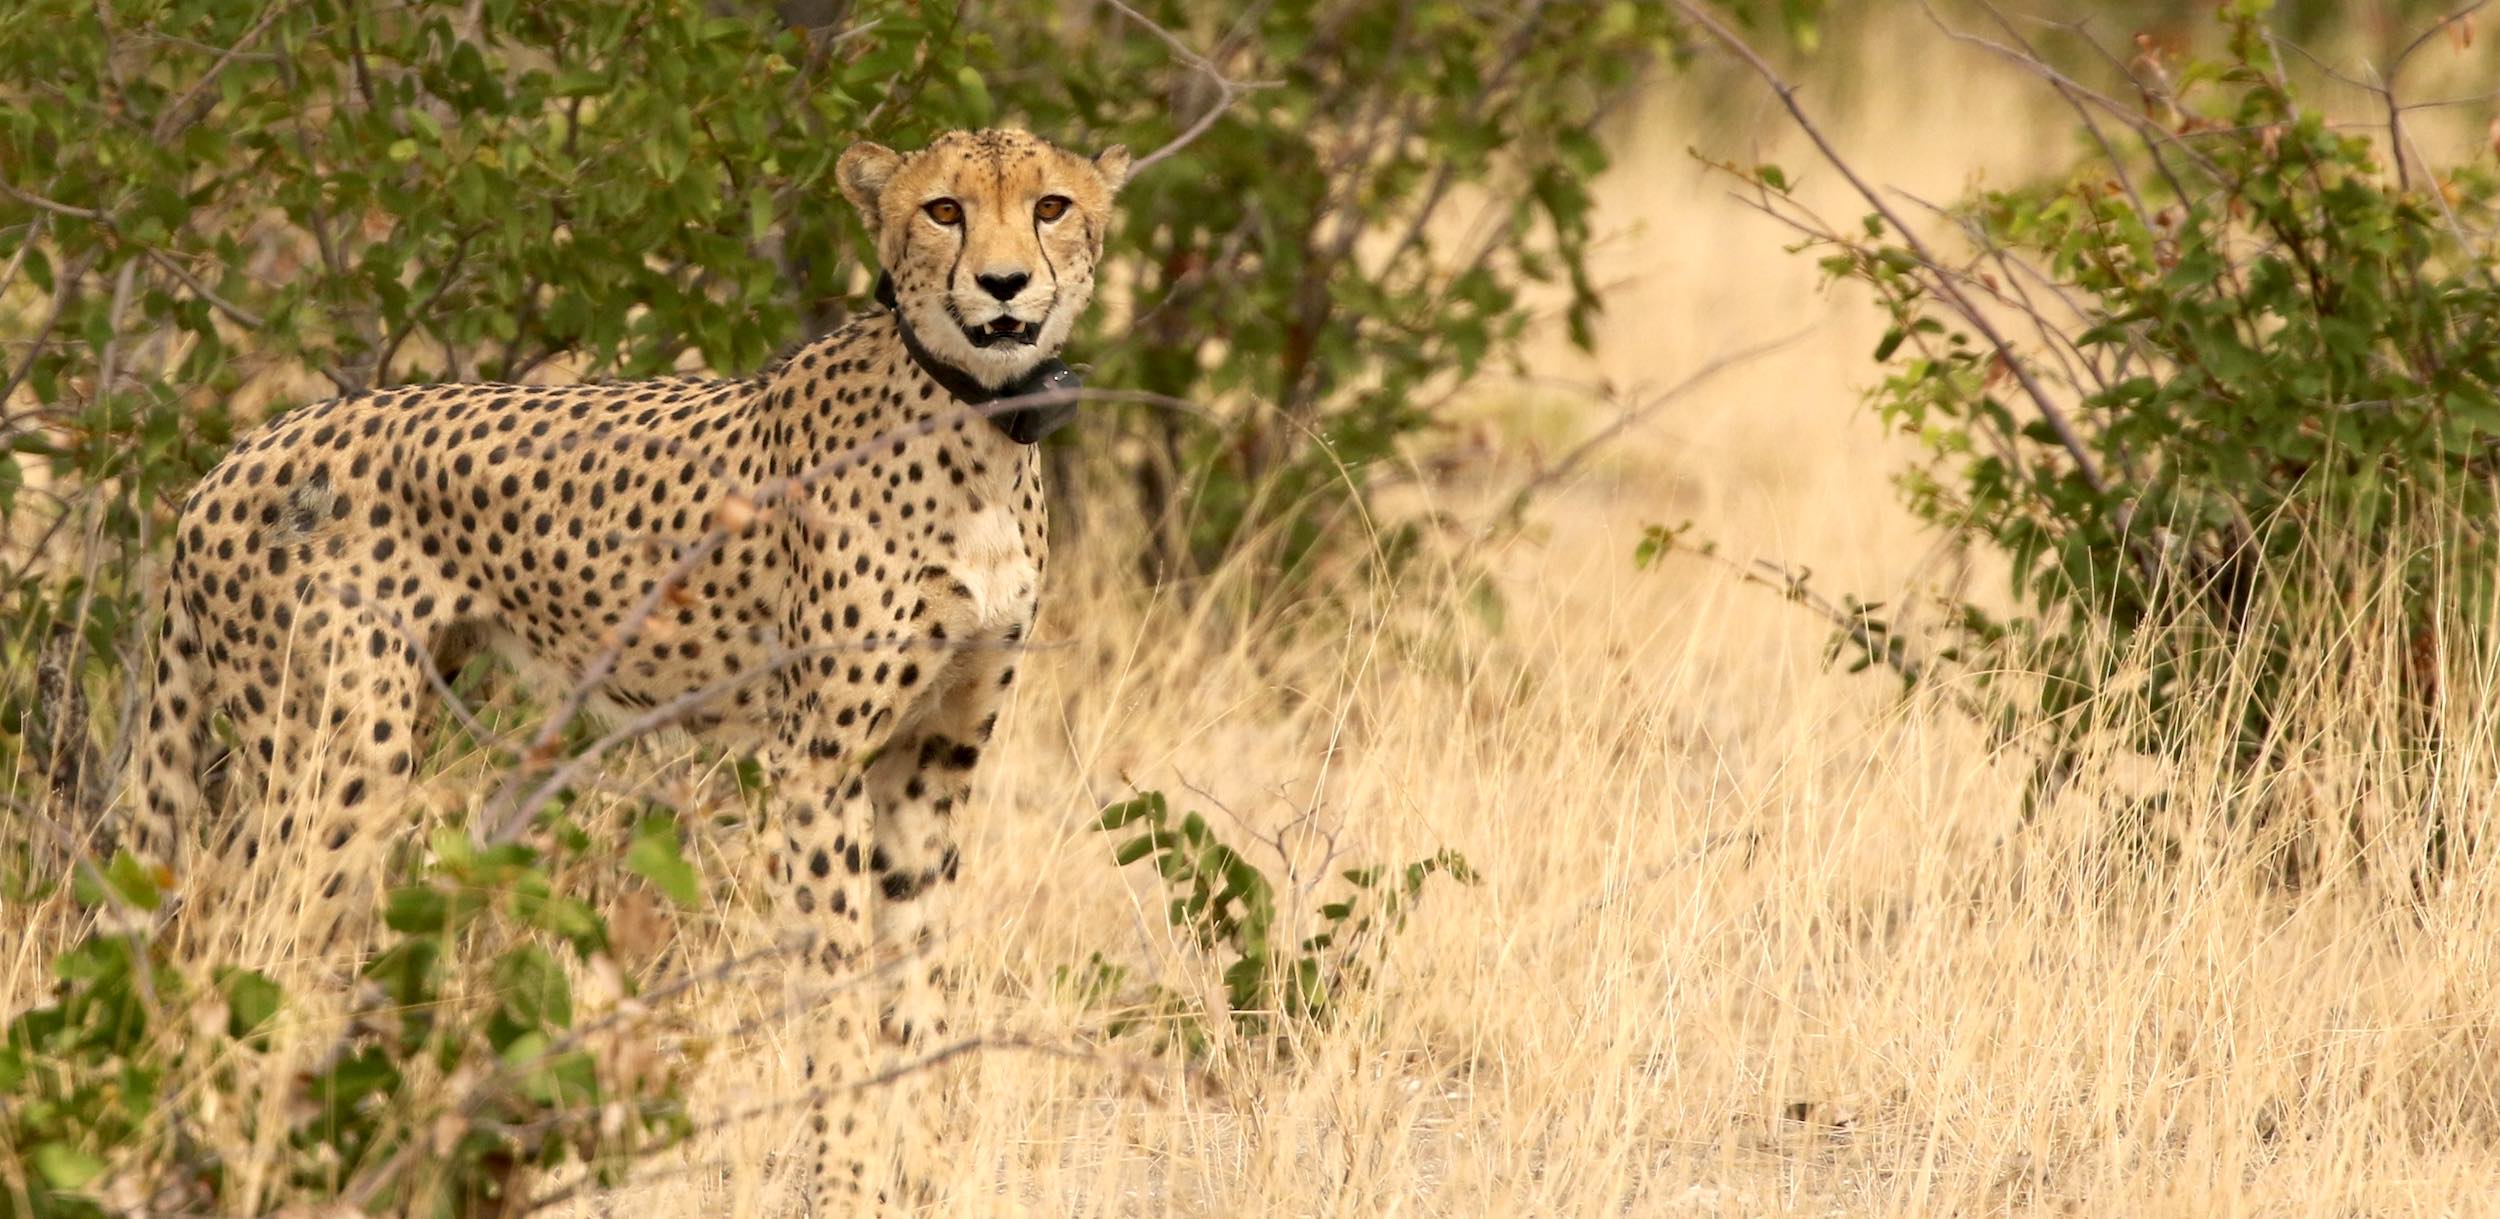 A satellite collared cheetah in the Namibian bush.